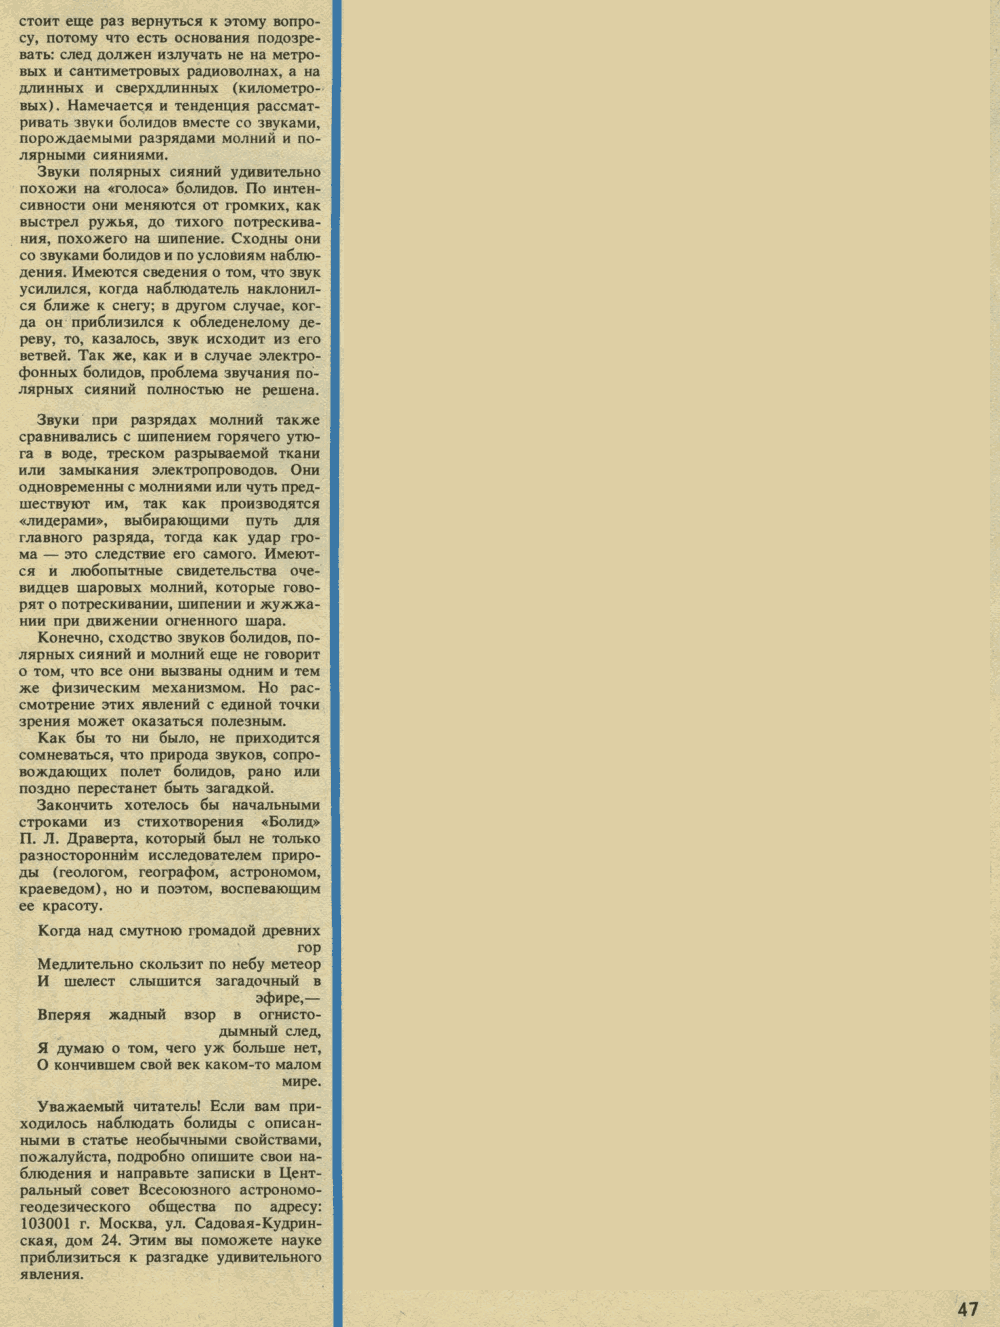 Загадочные звуки с неба. В. Казнев. Техника — Молодёжи, 1988, №2, с.42-47. Фотокопия №6